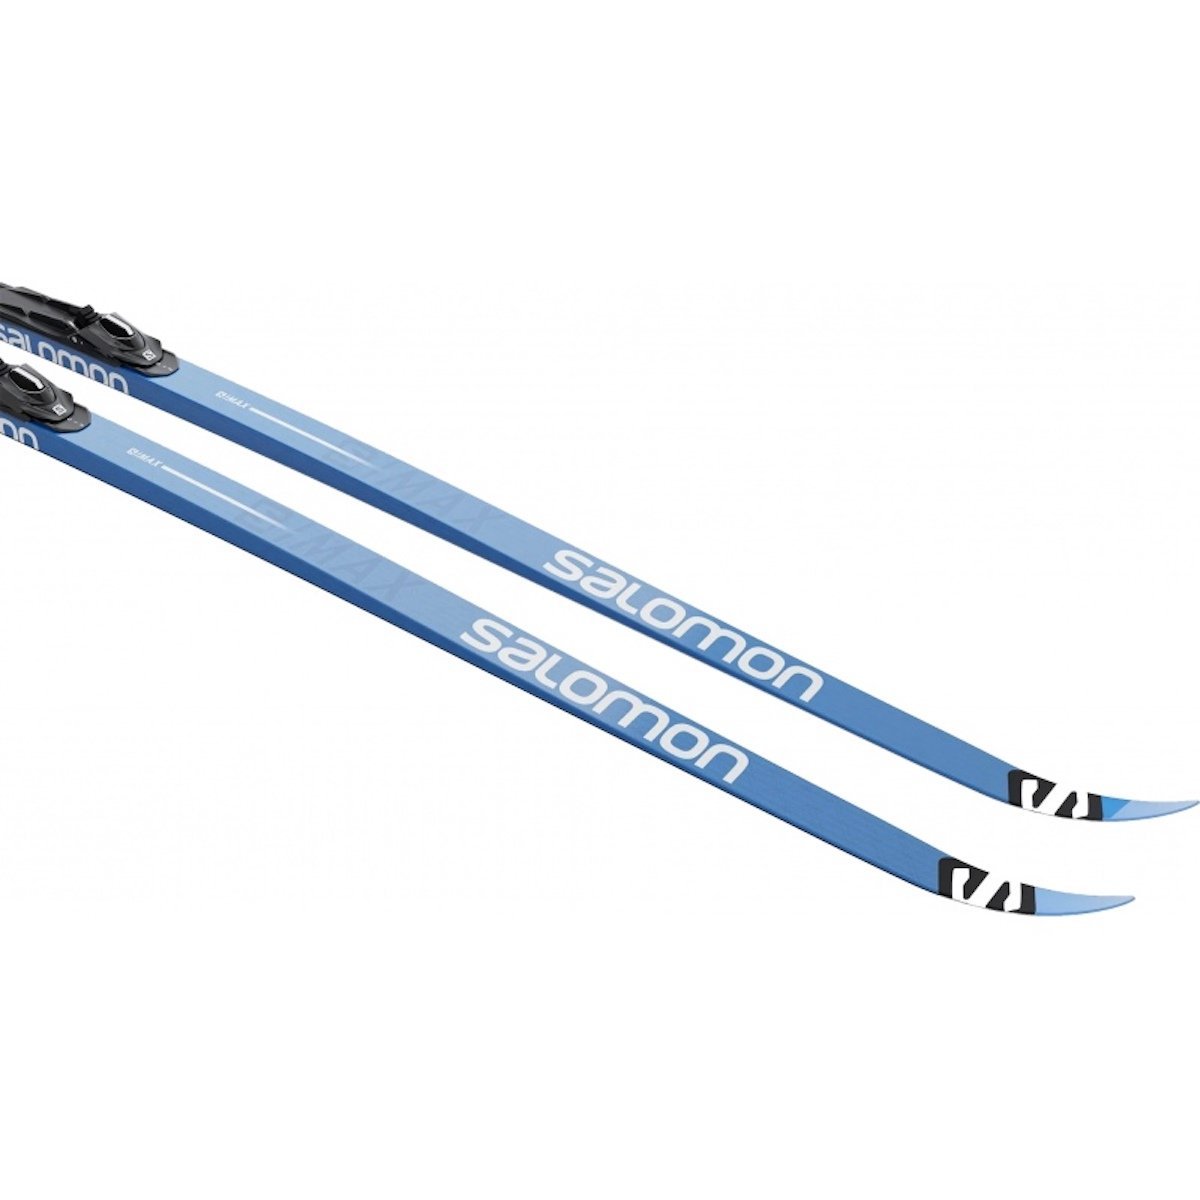 Bežecké lyže Salomon S/MAX eSKIN Med + viazanie PROLINK SHIFT-IN CL - modrá